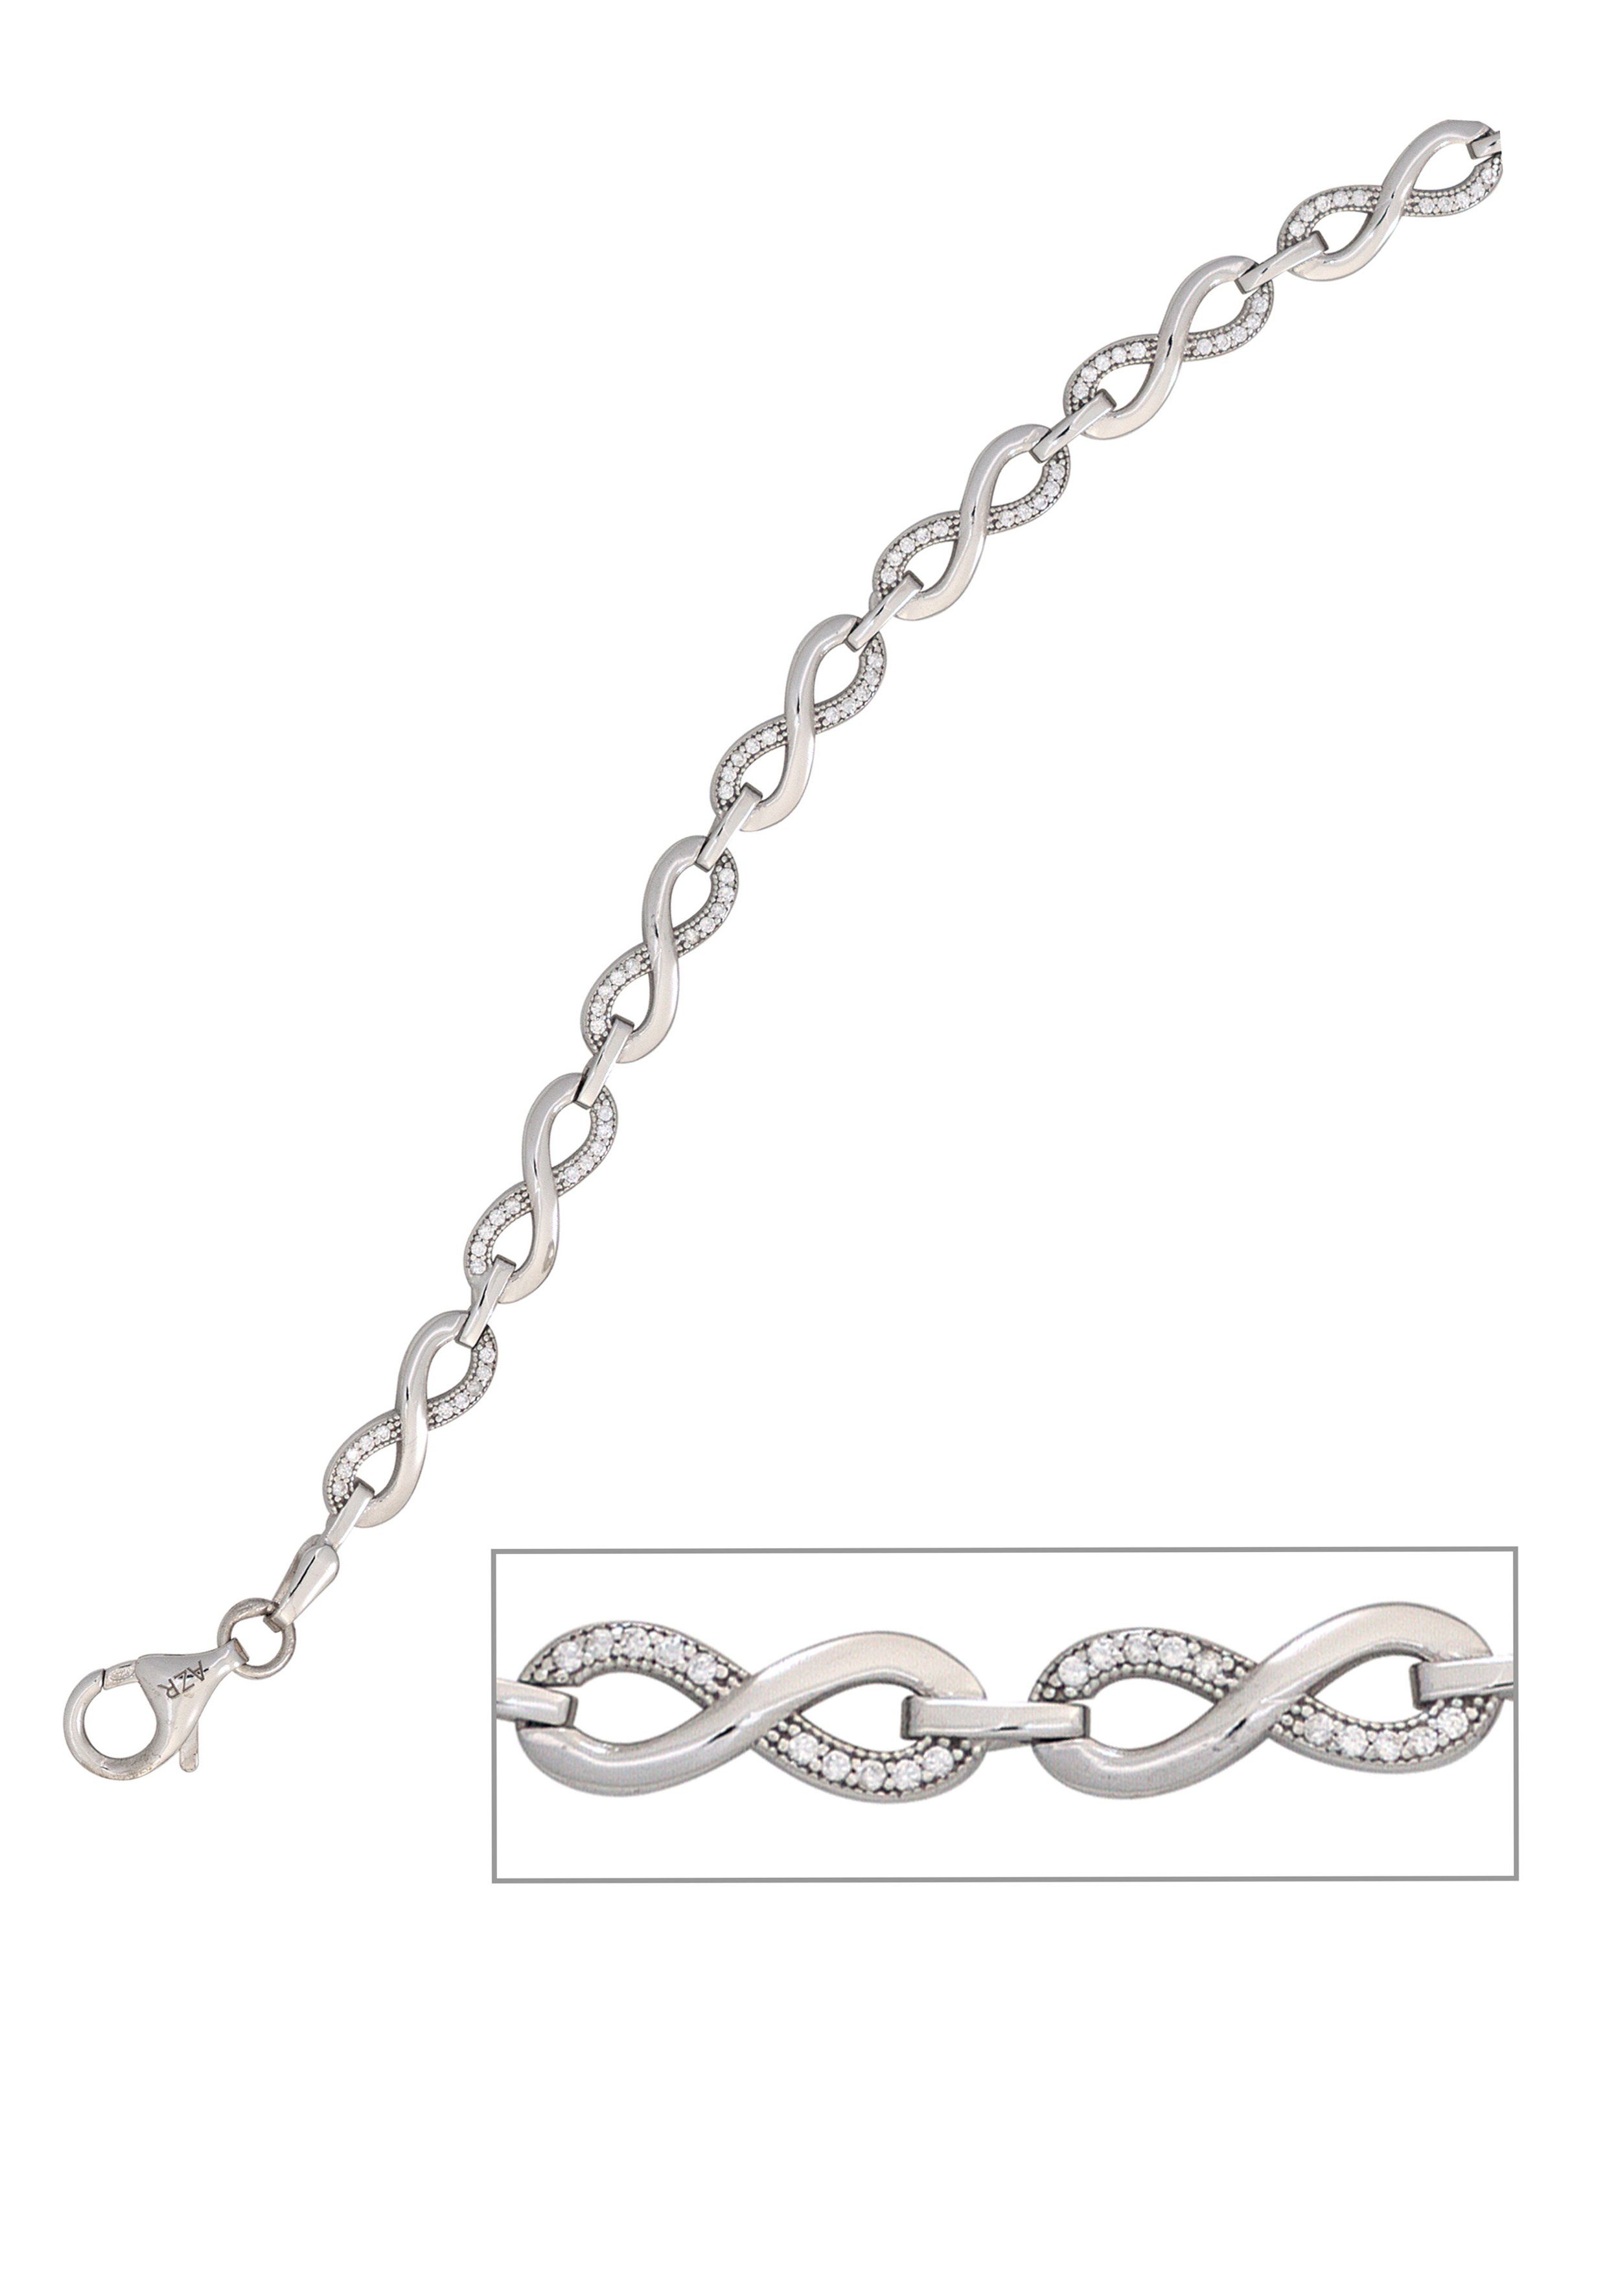 Zirkonia Armband, 19 rhodiniert JOBO 925 cm Silber mit Silberarmband